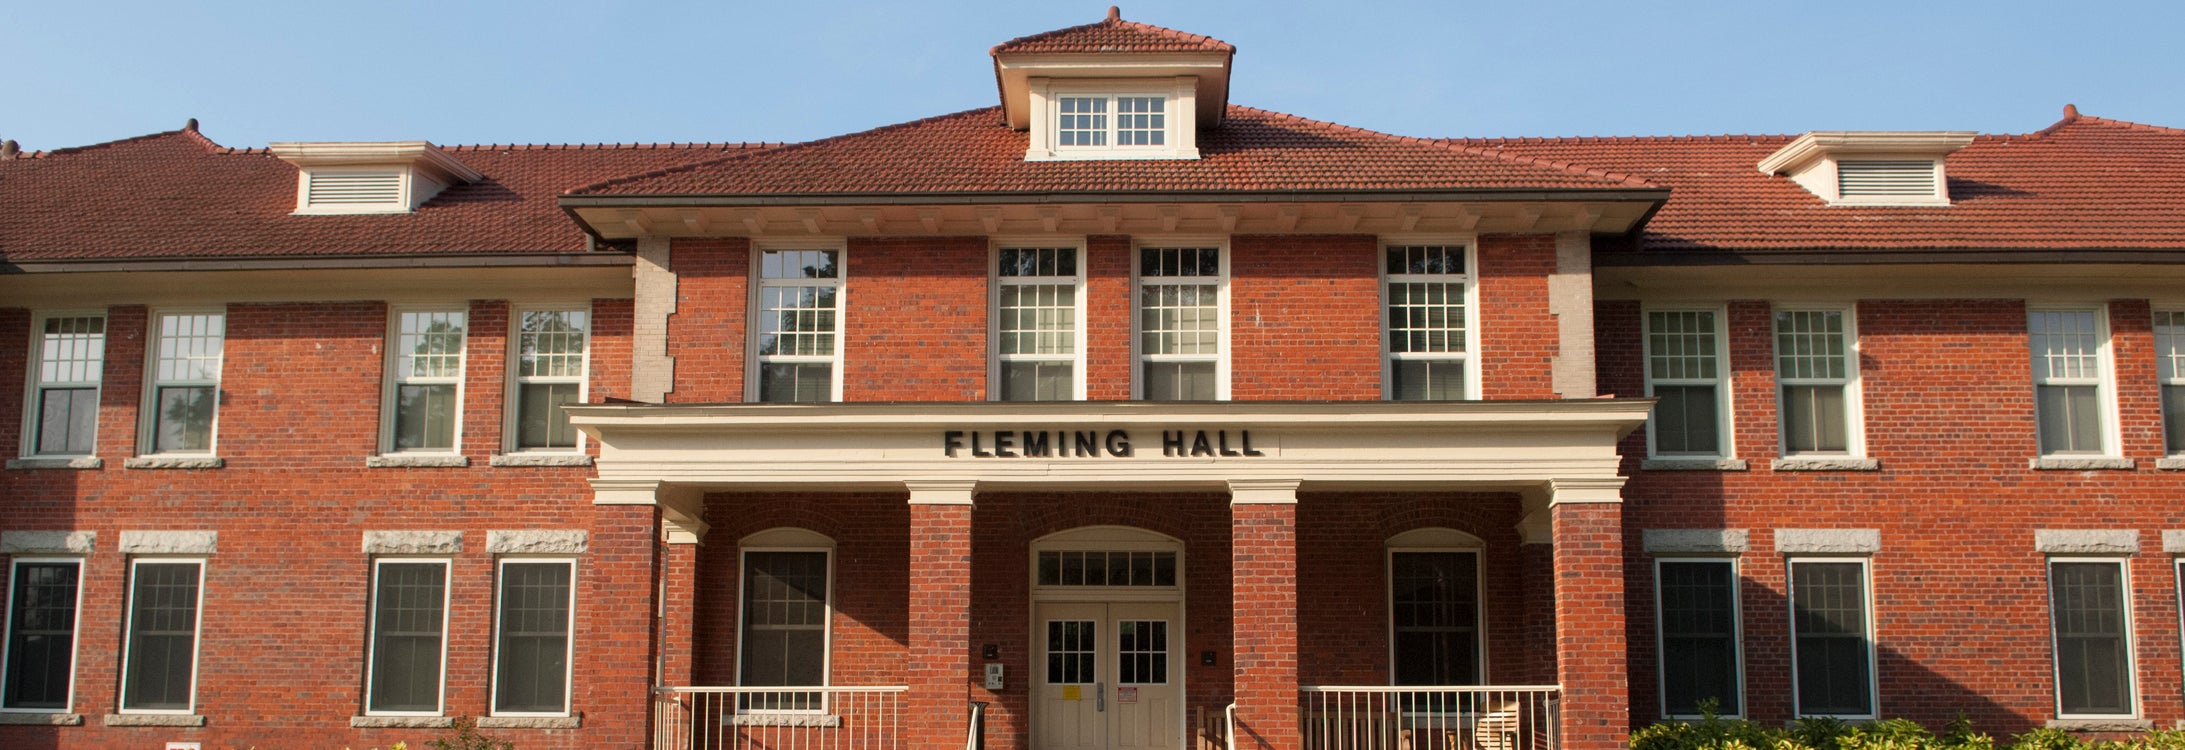 Fleming hall